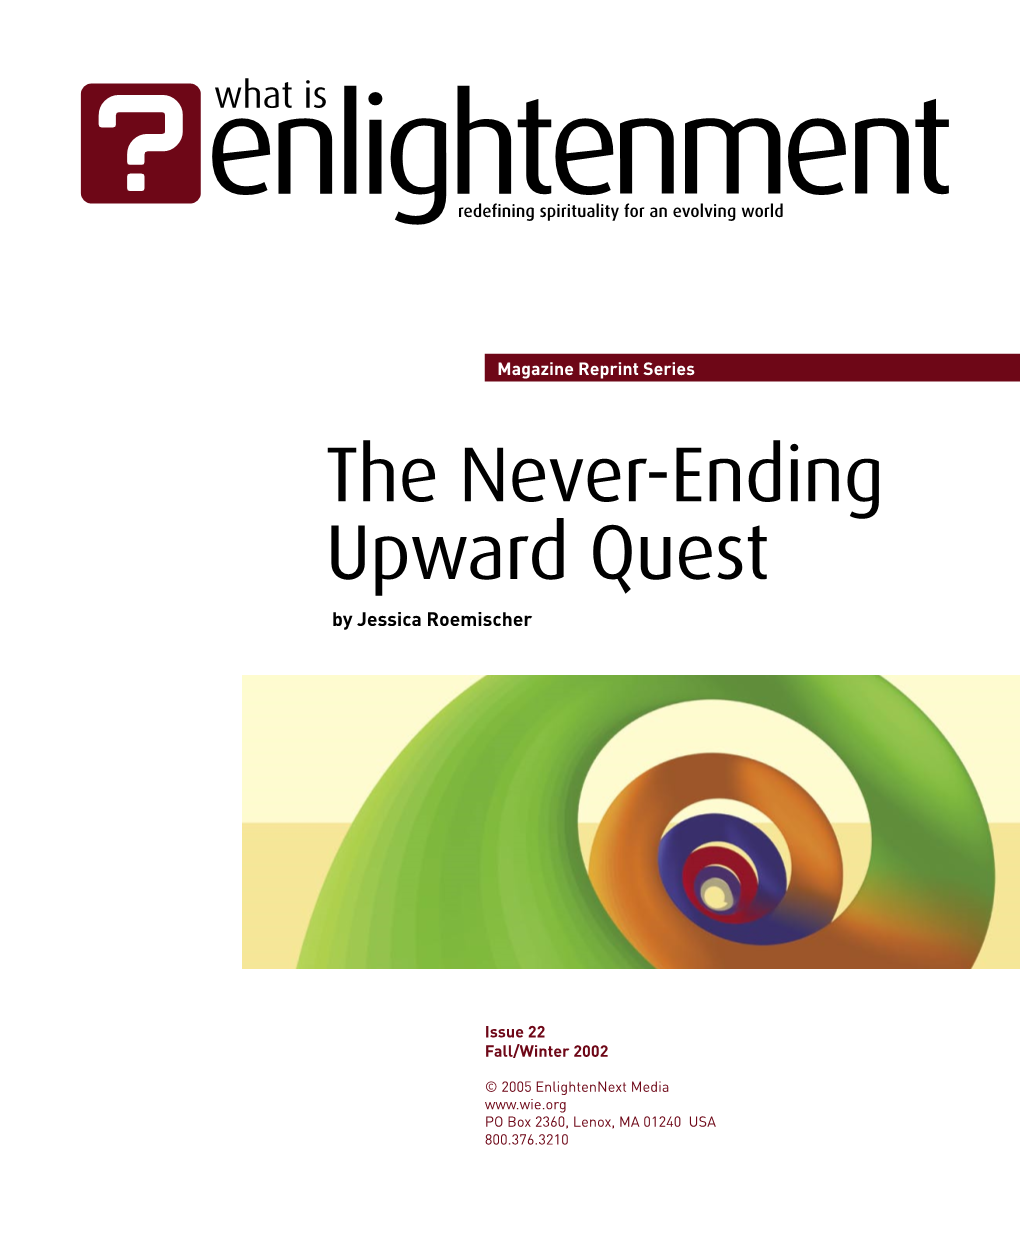 The Never-Ending Upward Quest by Jessica Roemischer